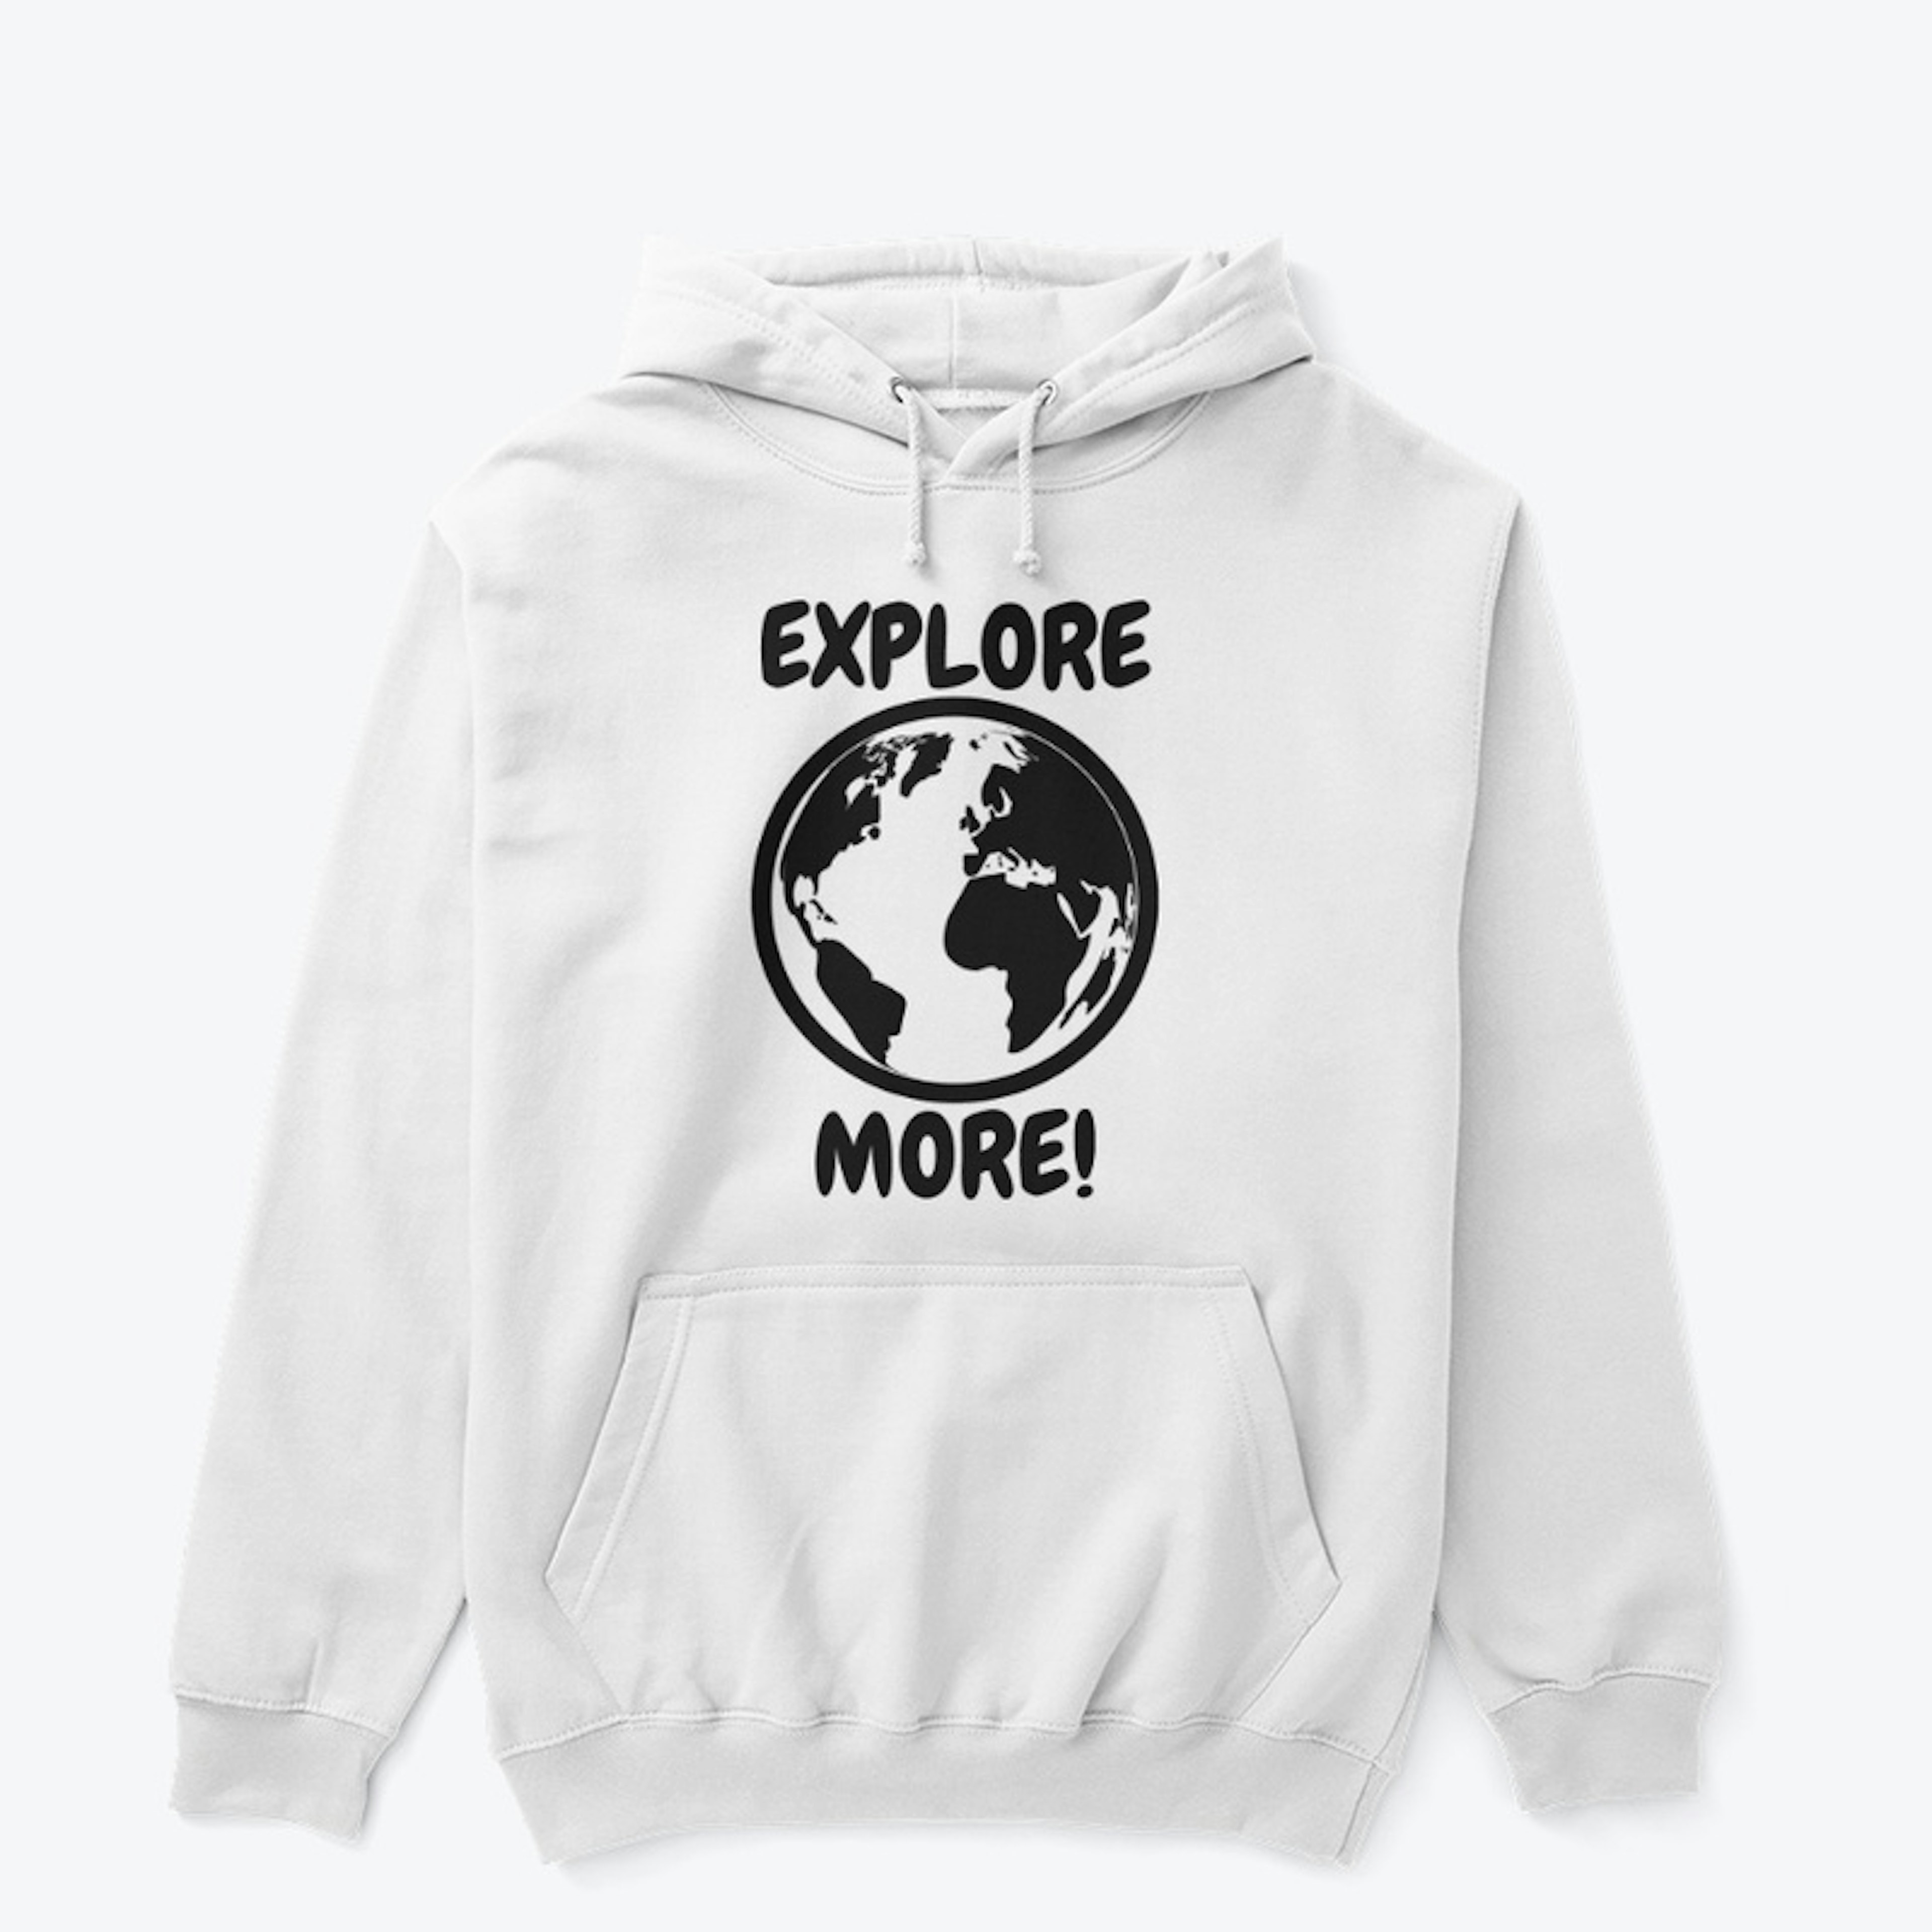 Explore More! Pullover Hoodie 